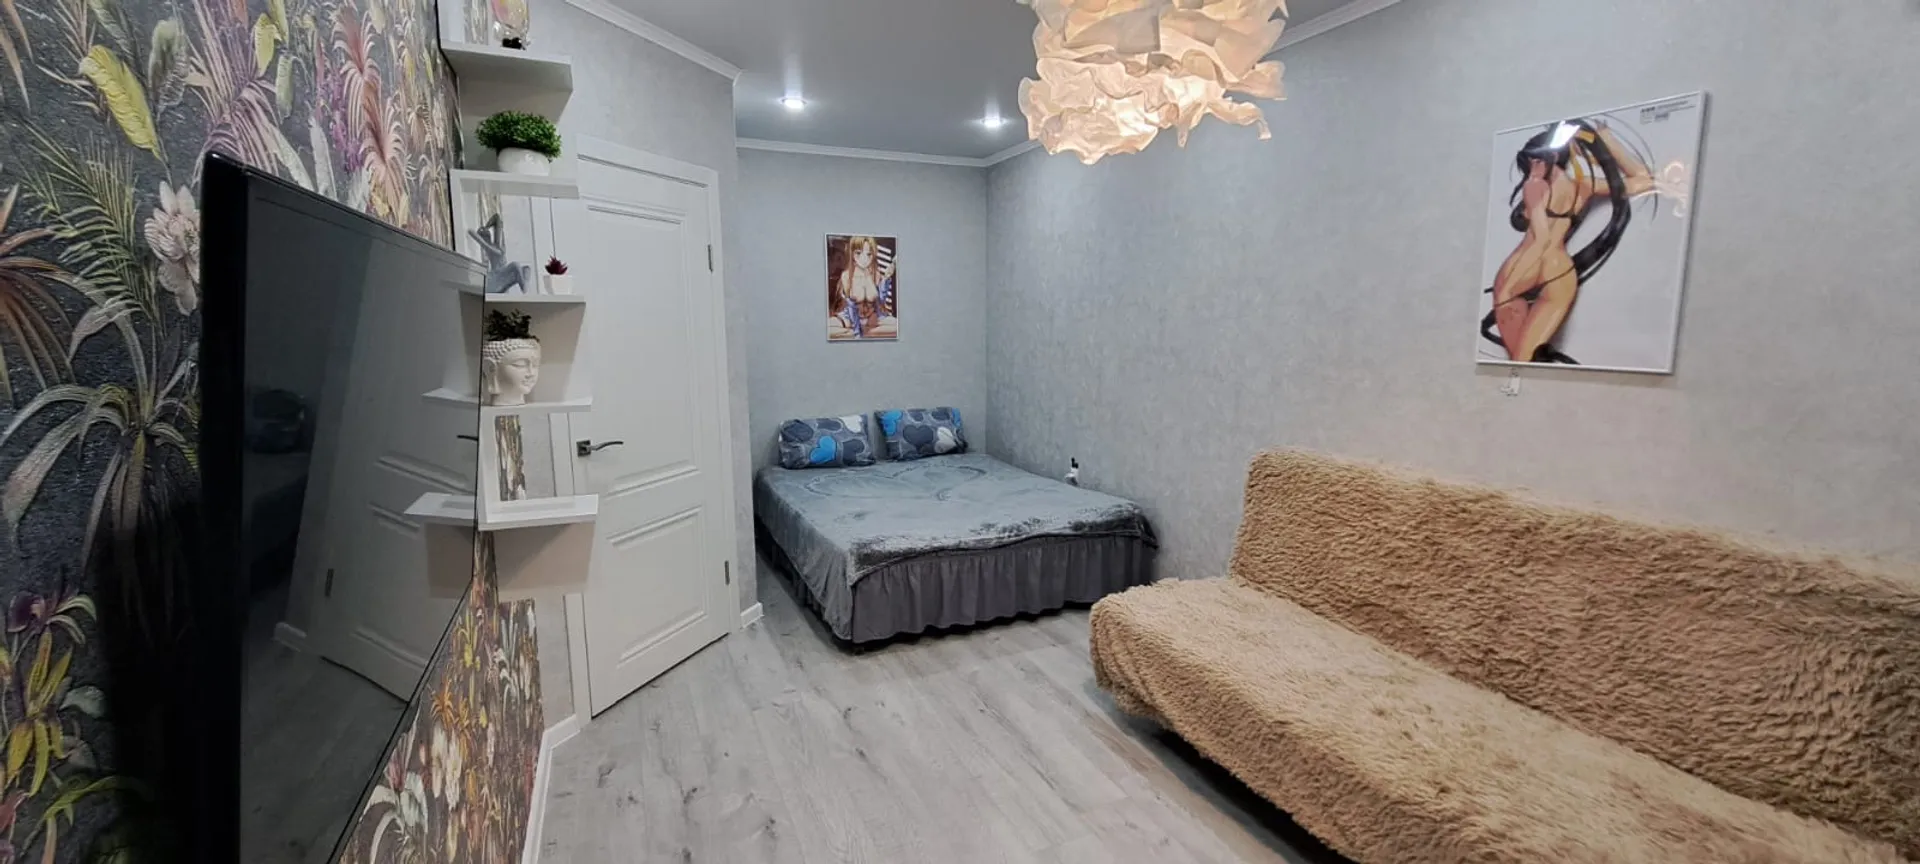 "50 оттенков серого" 1-комнатная квартира в Михайловске - фото 1